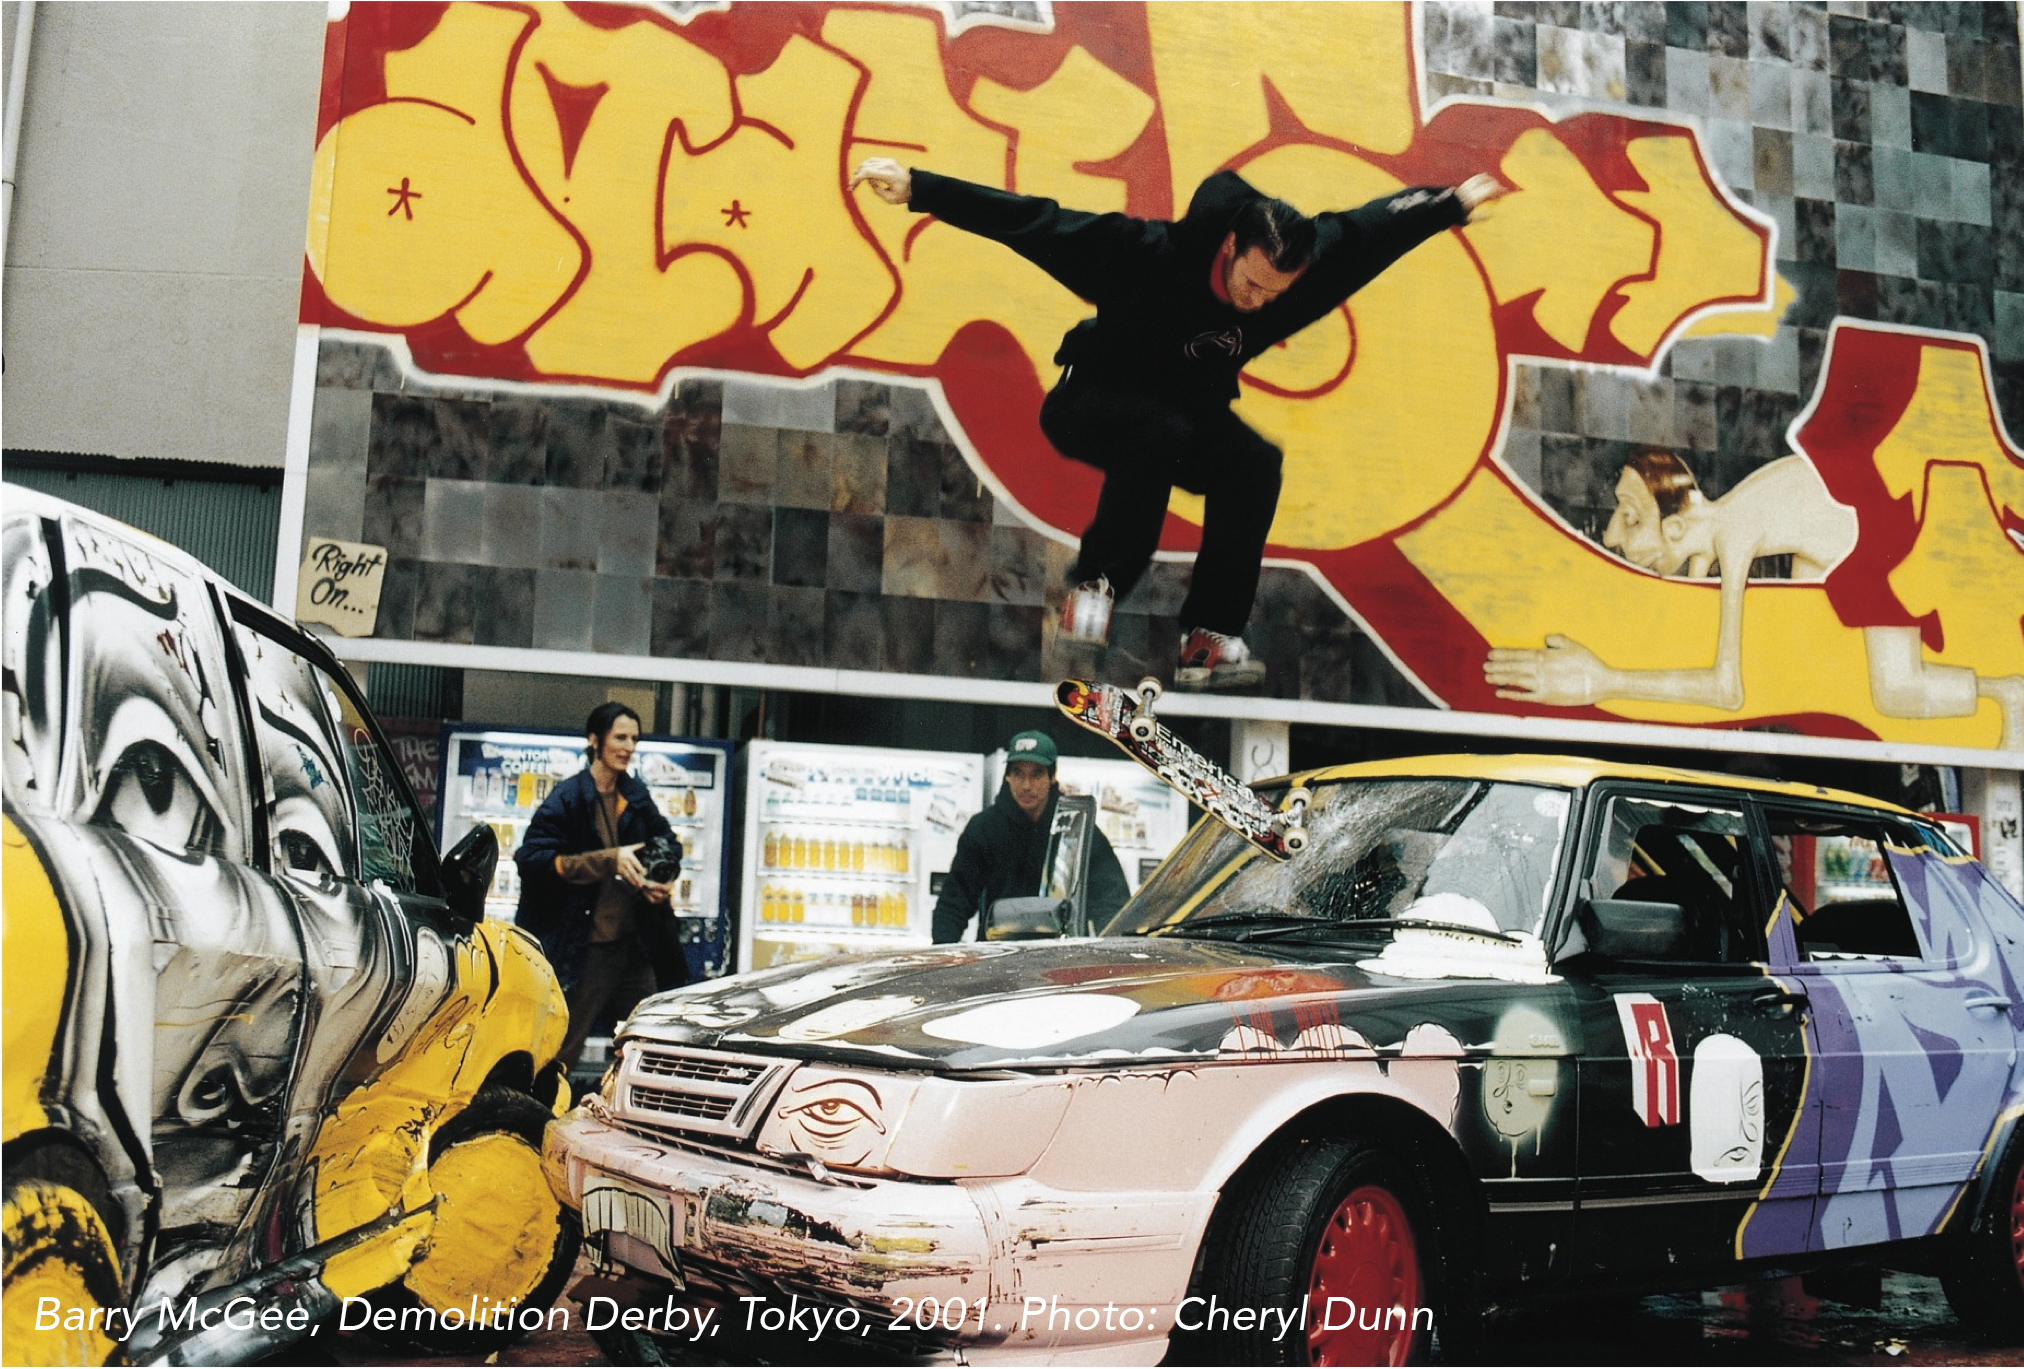 Barry McGee, Demolition Derby, Tokyo, 2001. Photo: Cheryl Dunn